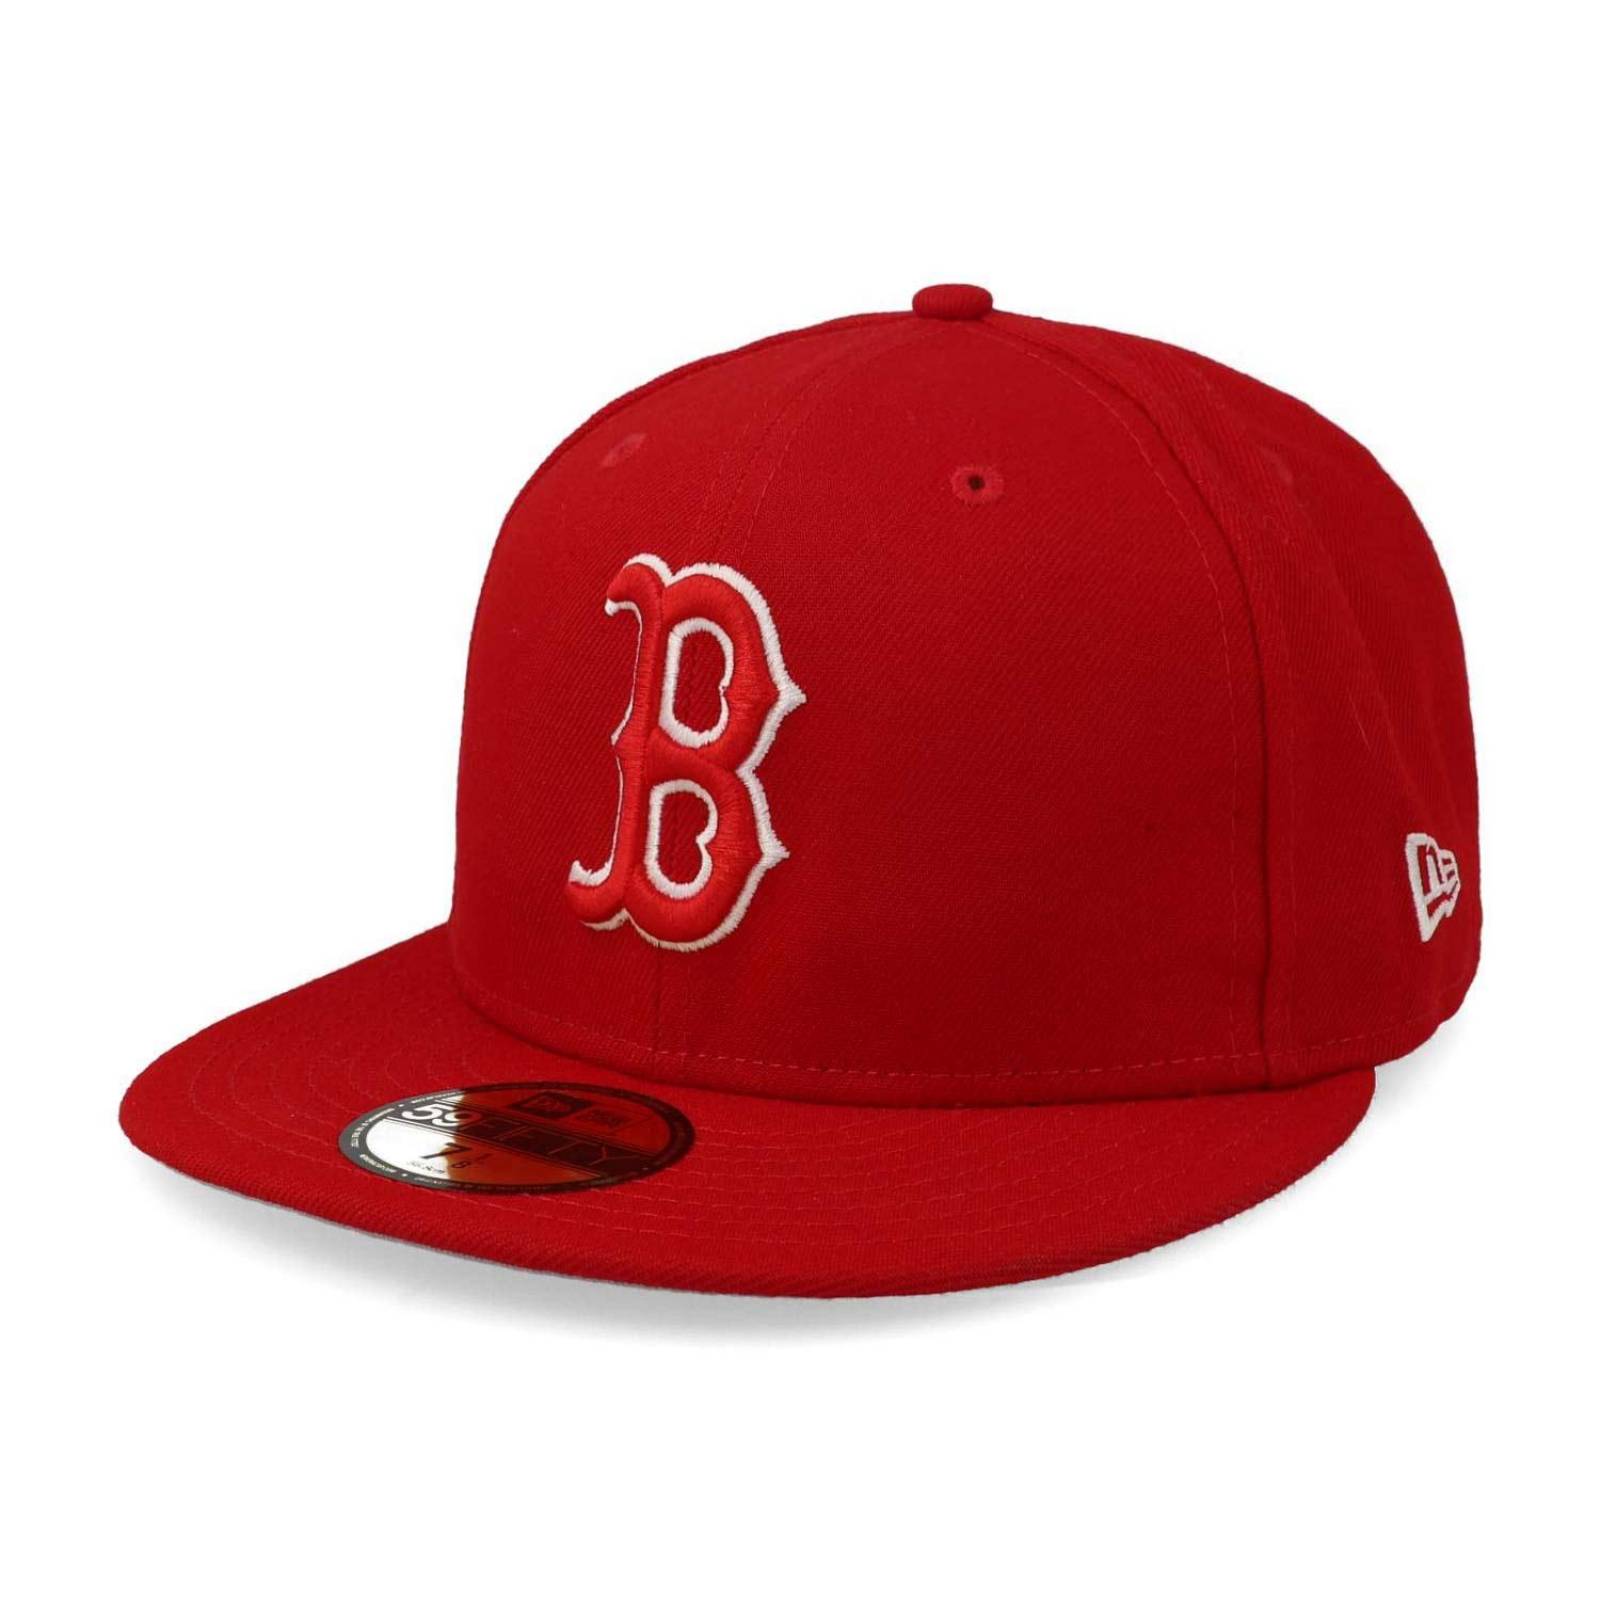 Gorra Boston Red Red Sox Azul Rey 59fifty